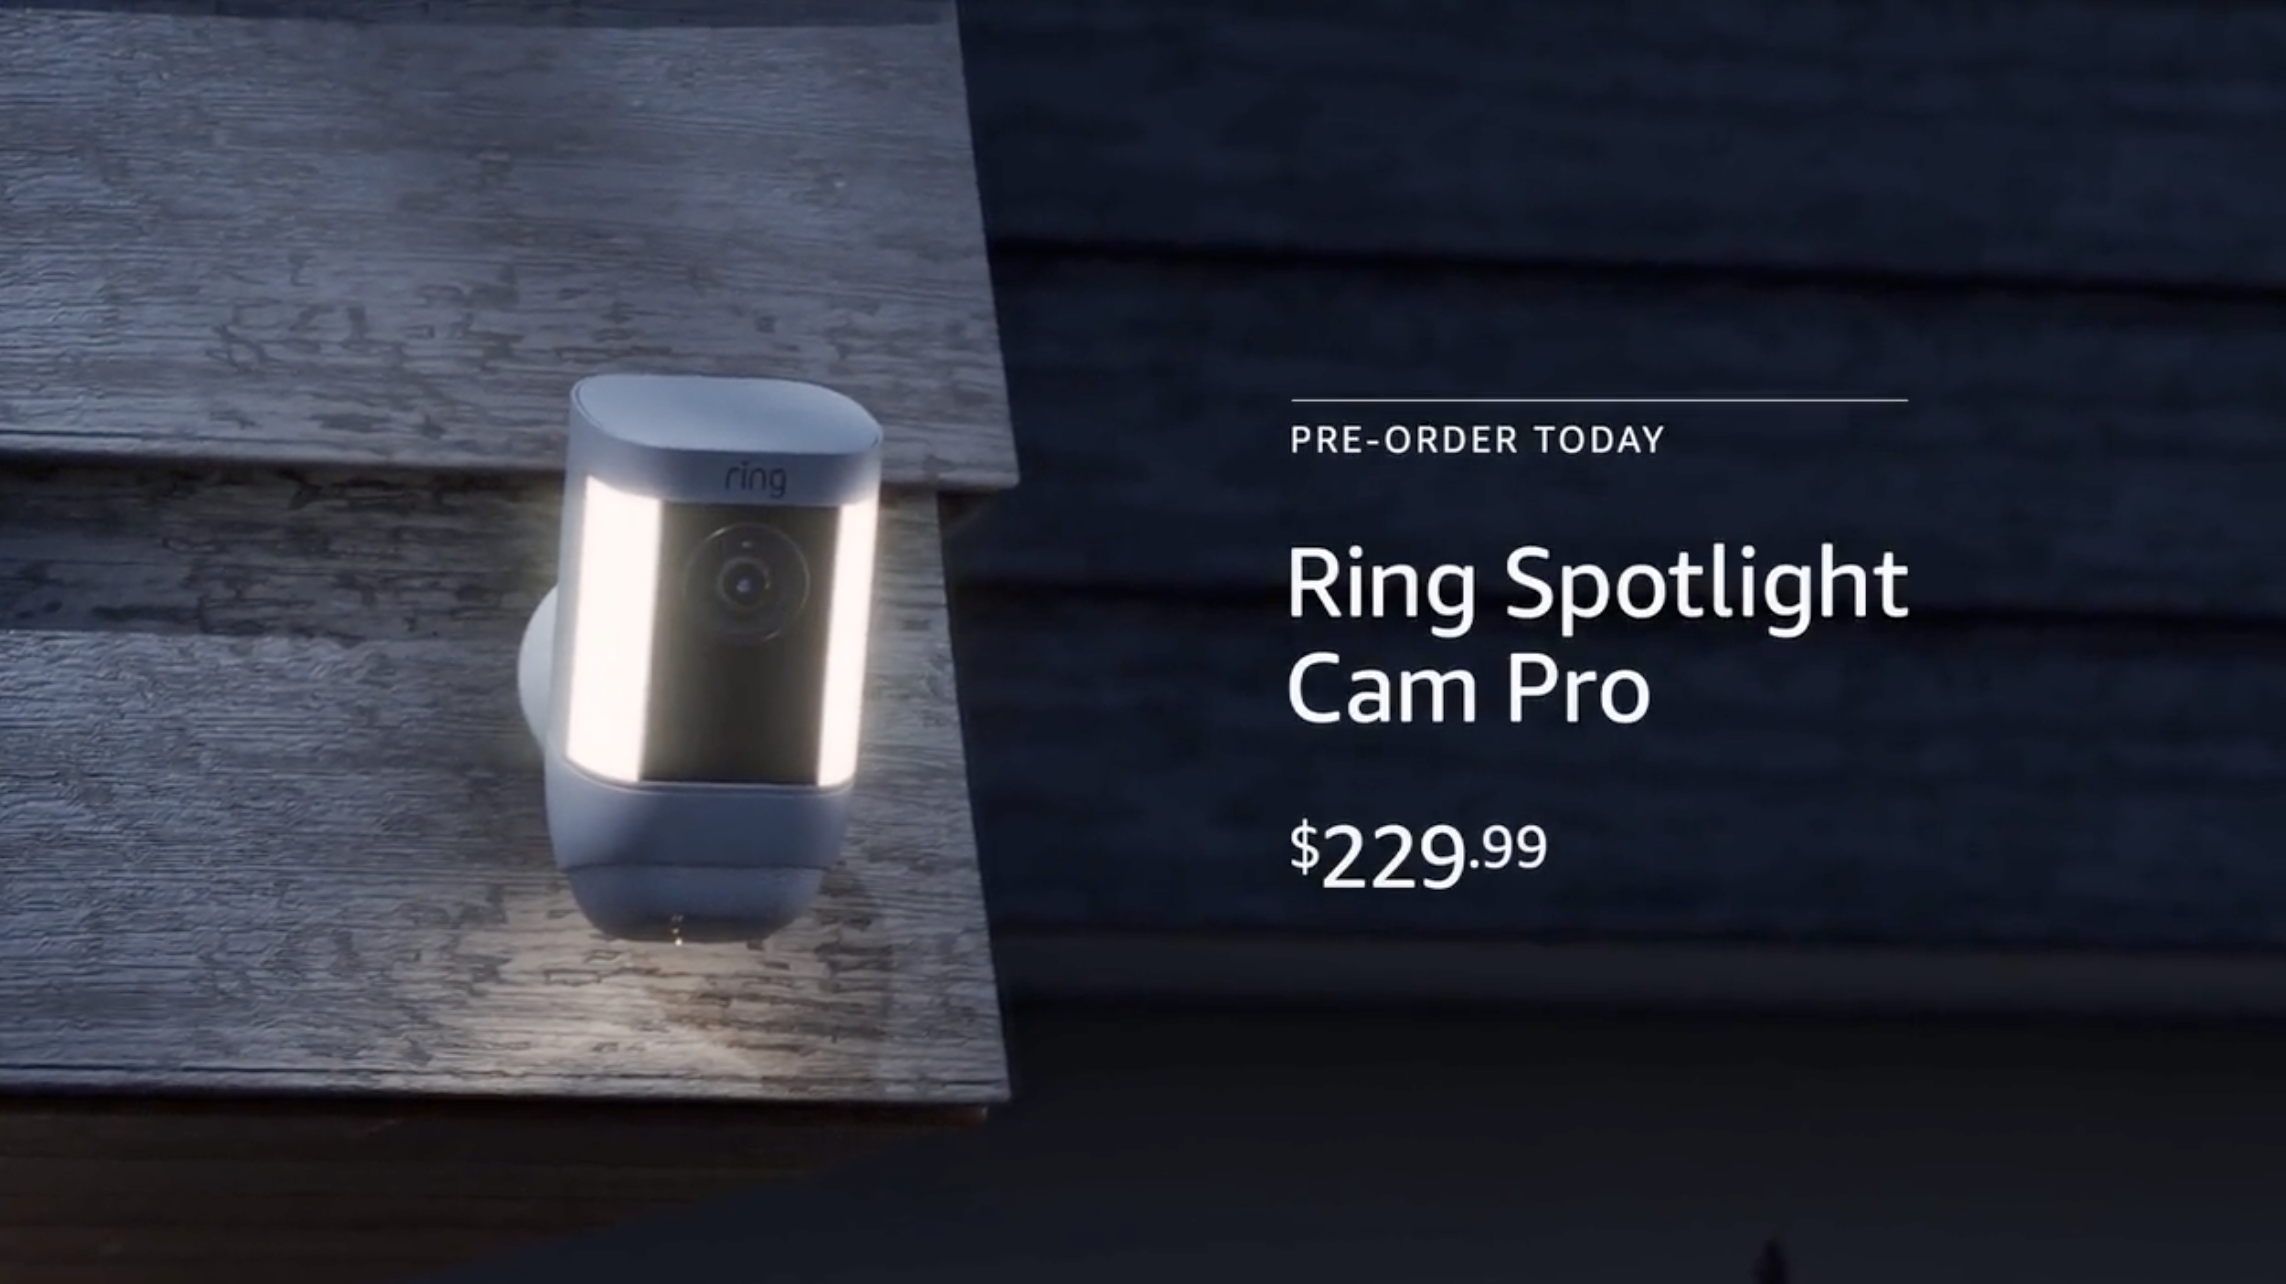 Ring Spotlight Cam Pro at Amazon event